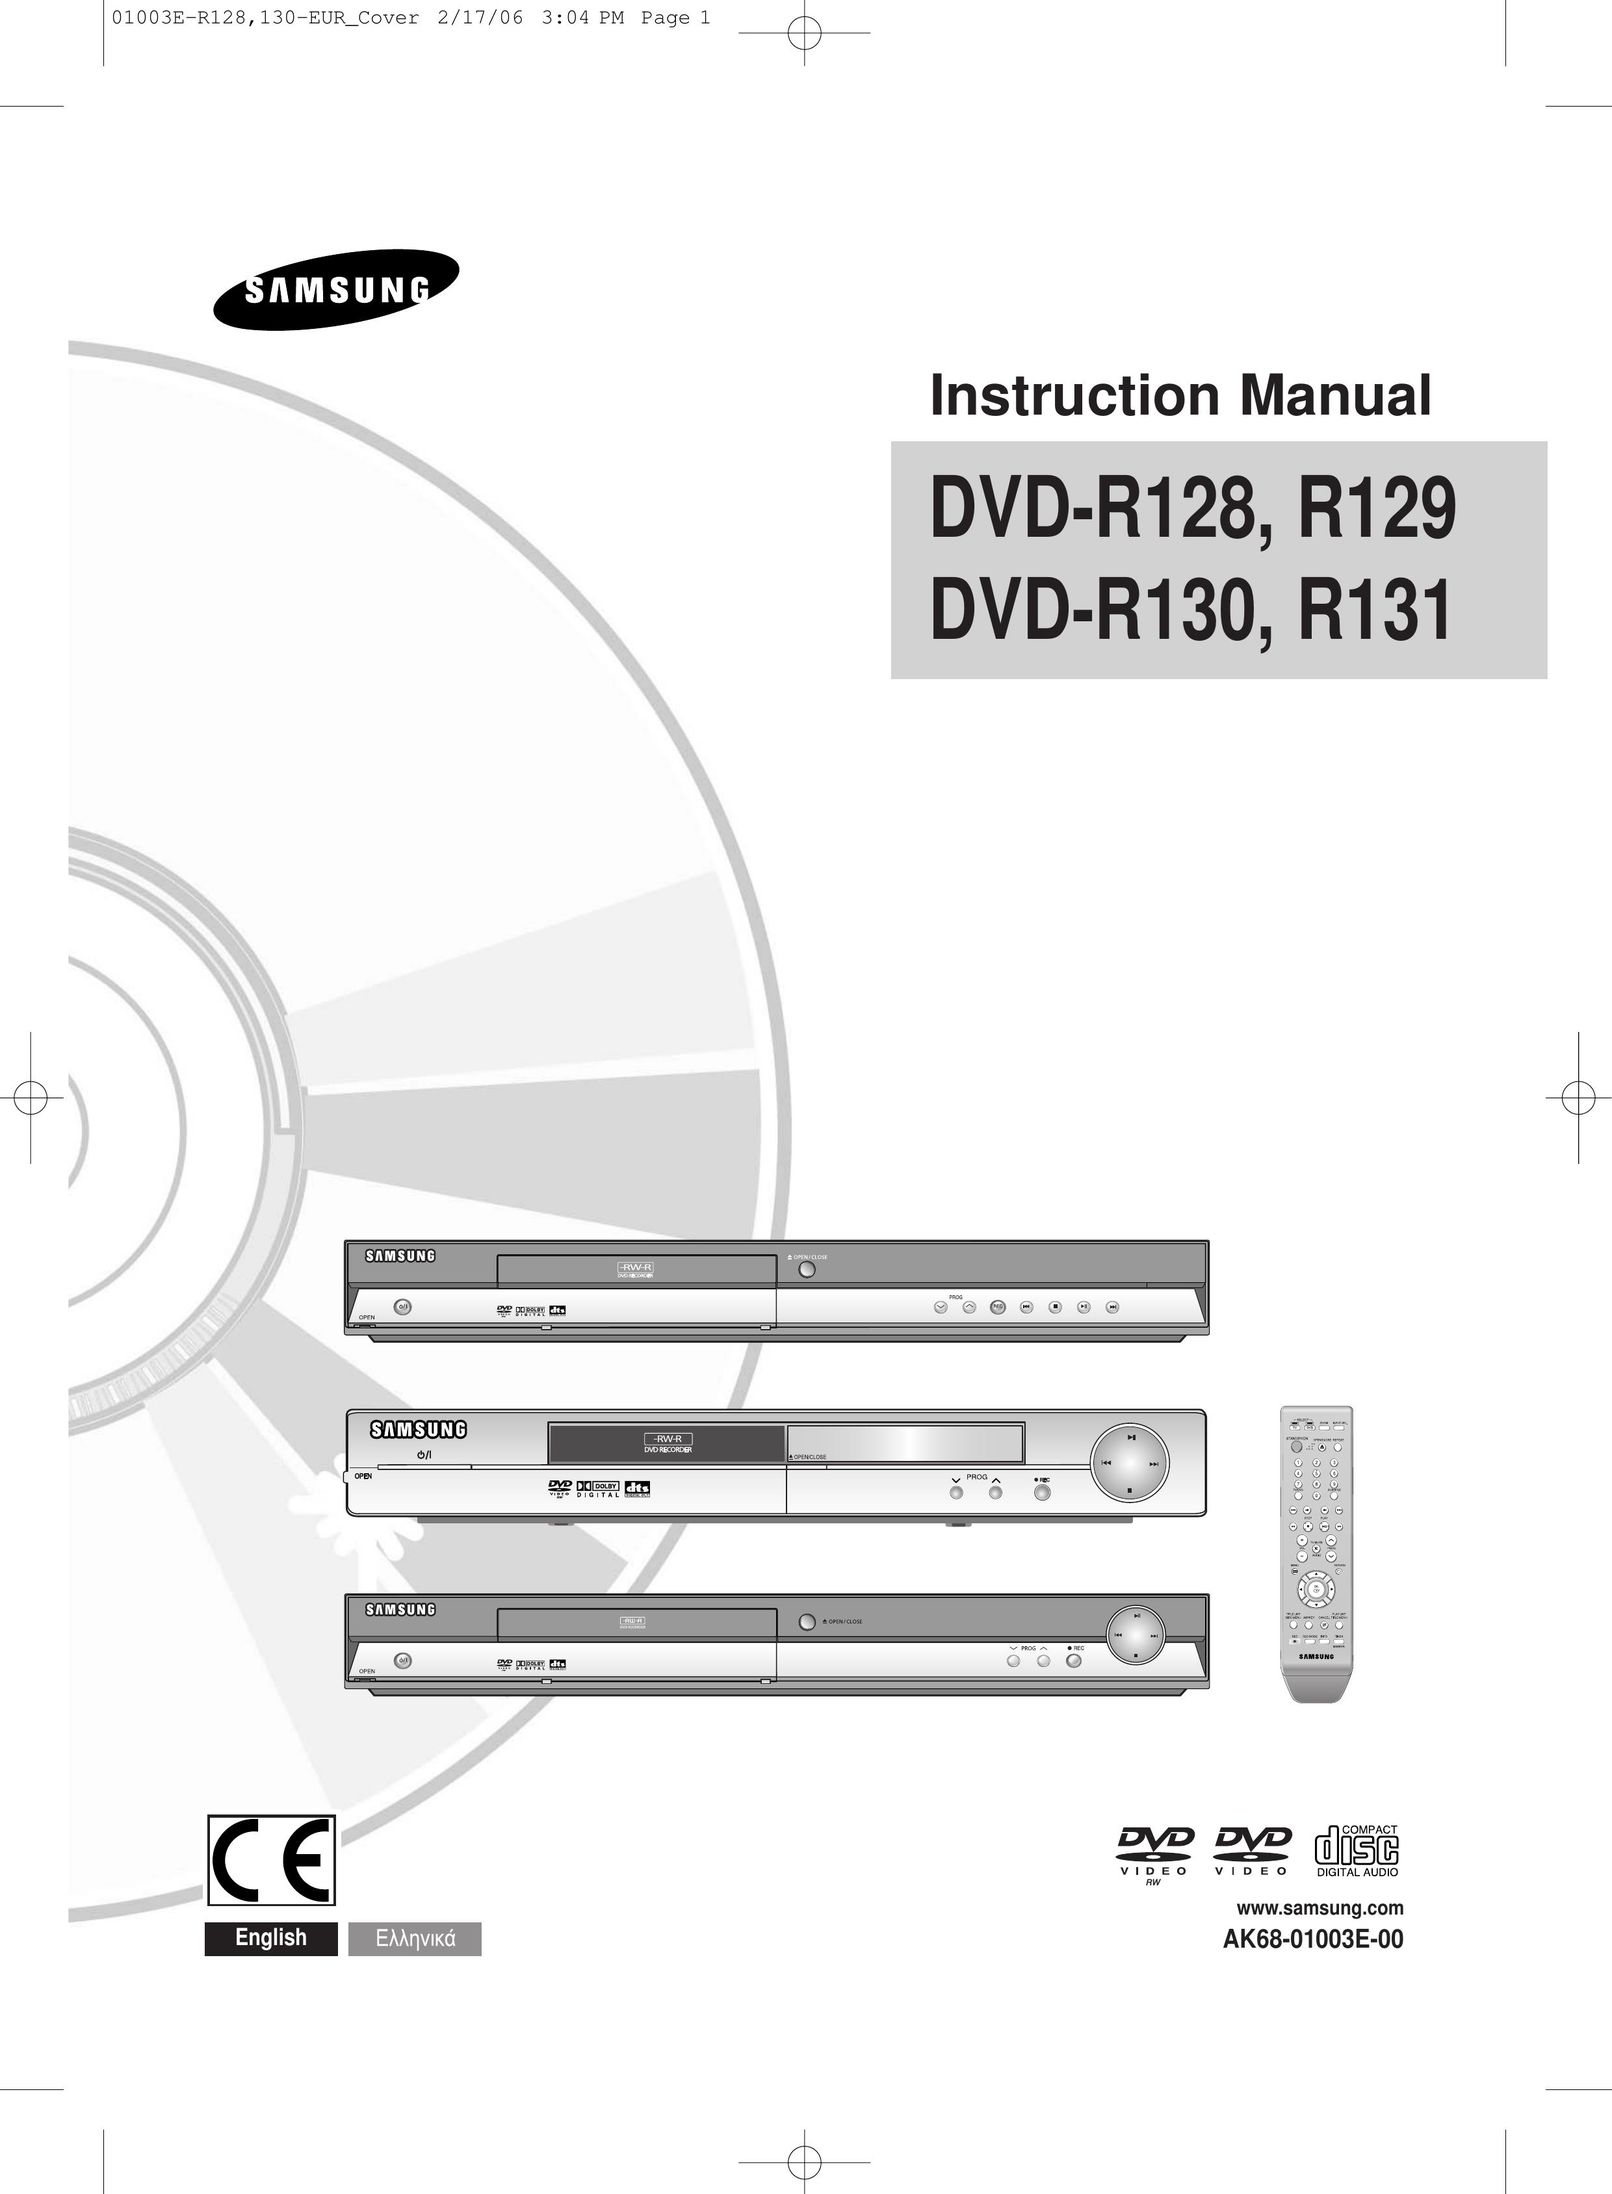 Samsung DVD-R128 DVD Recorder User Manual